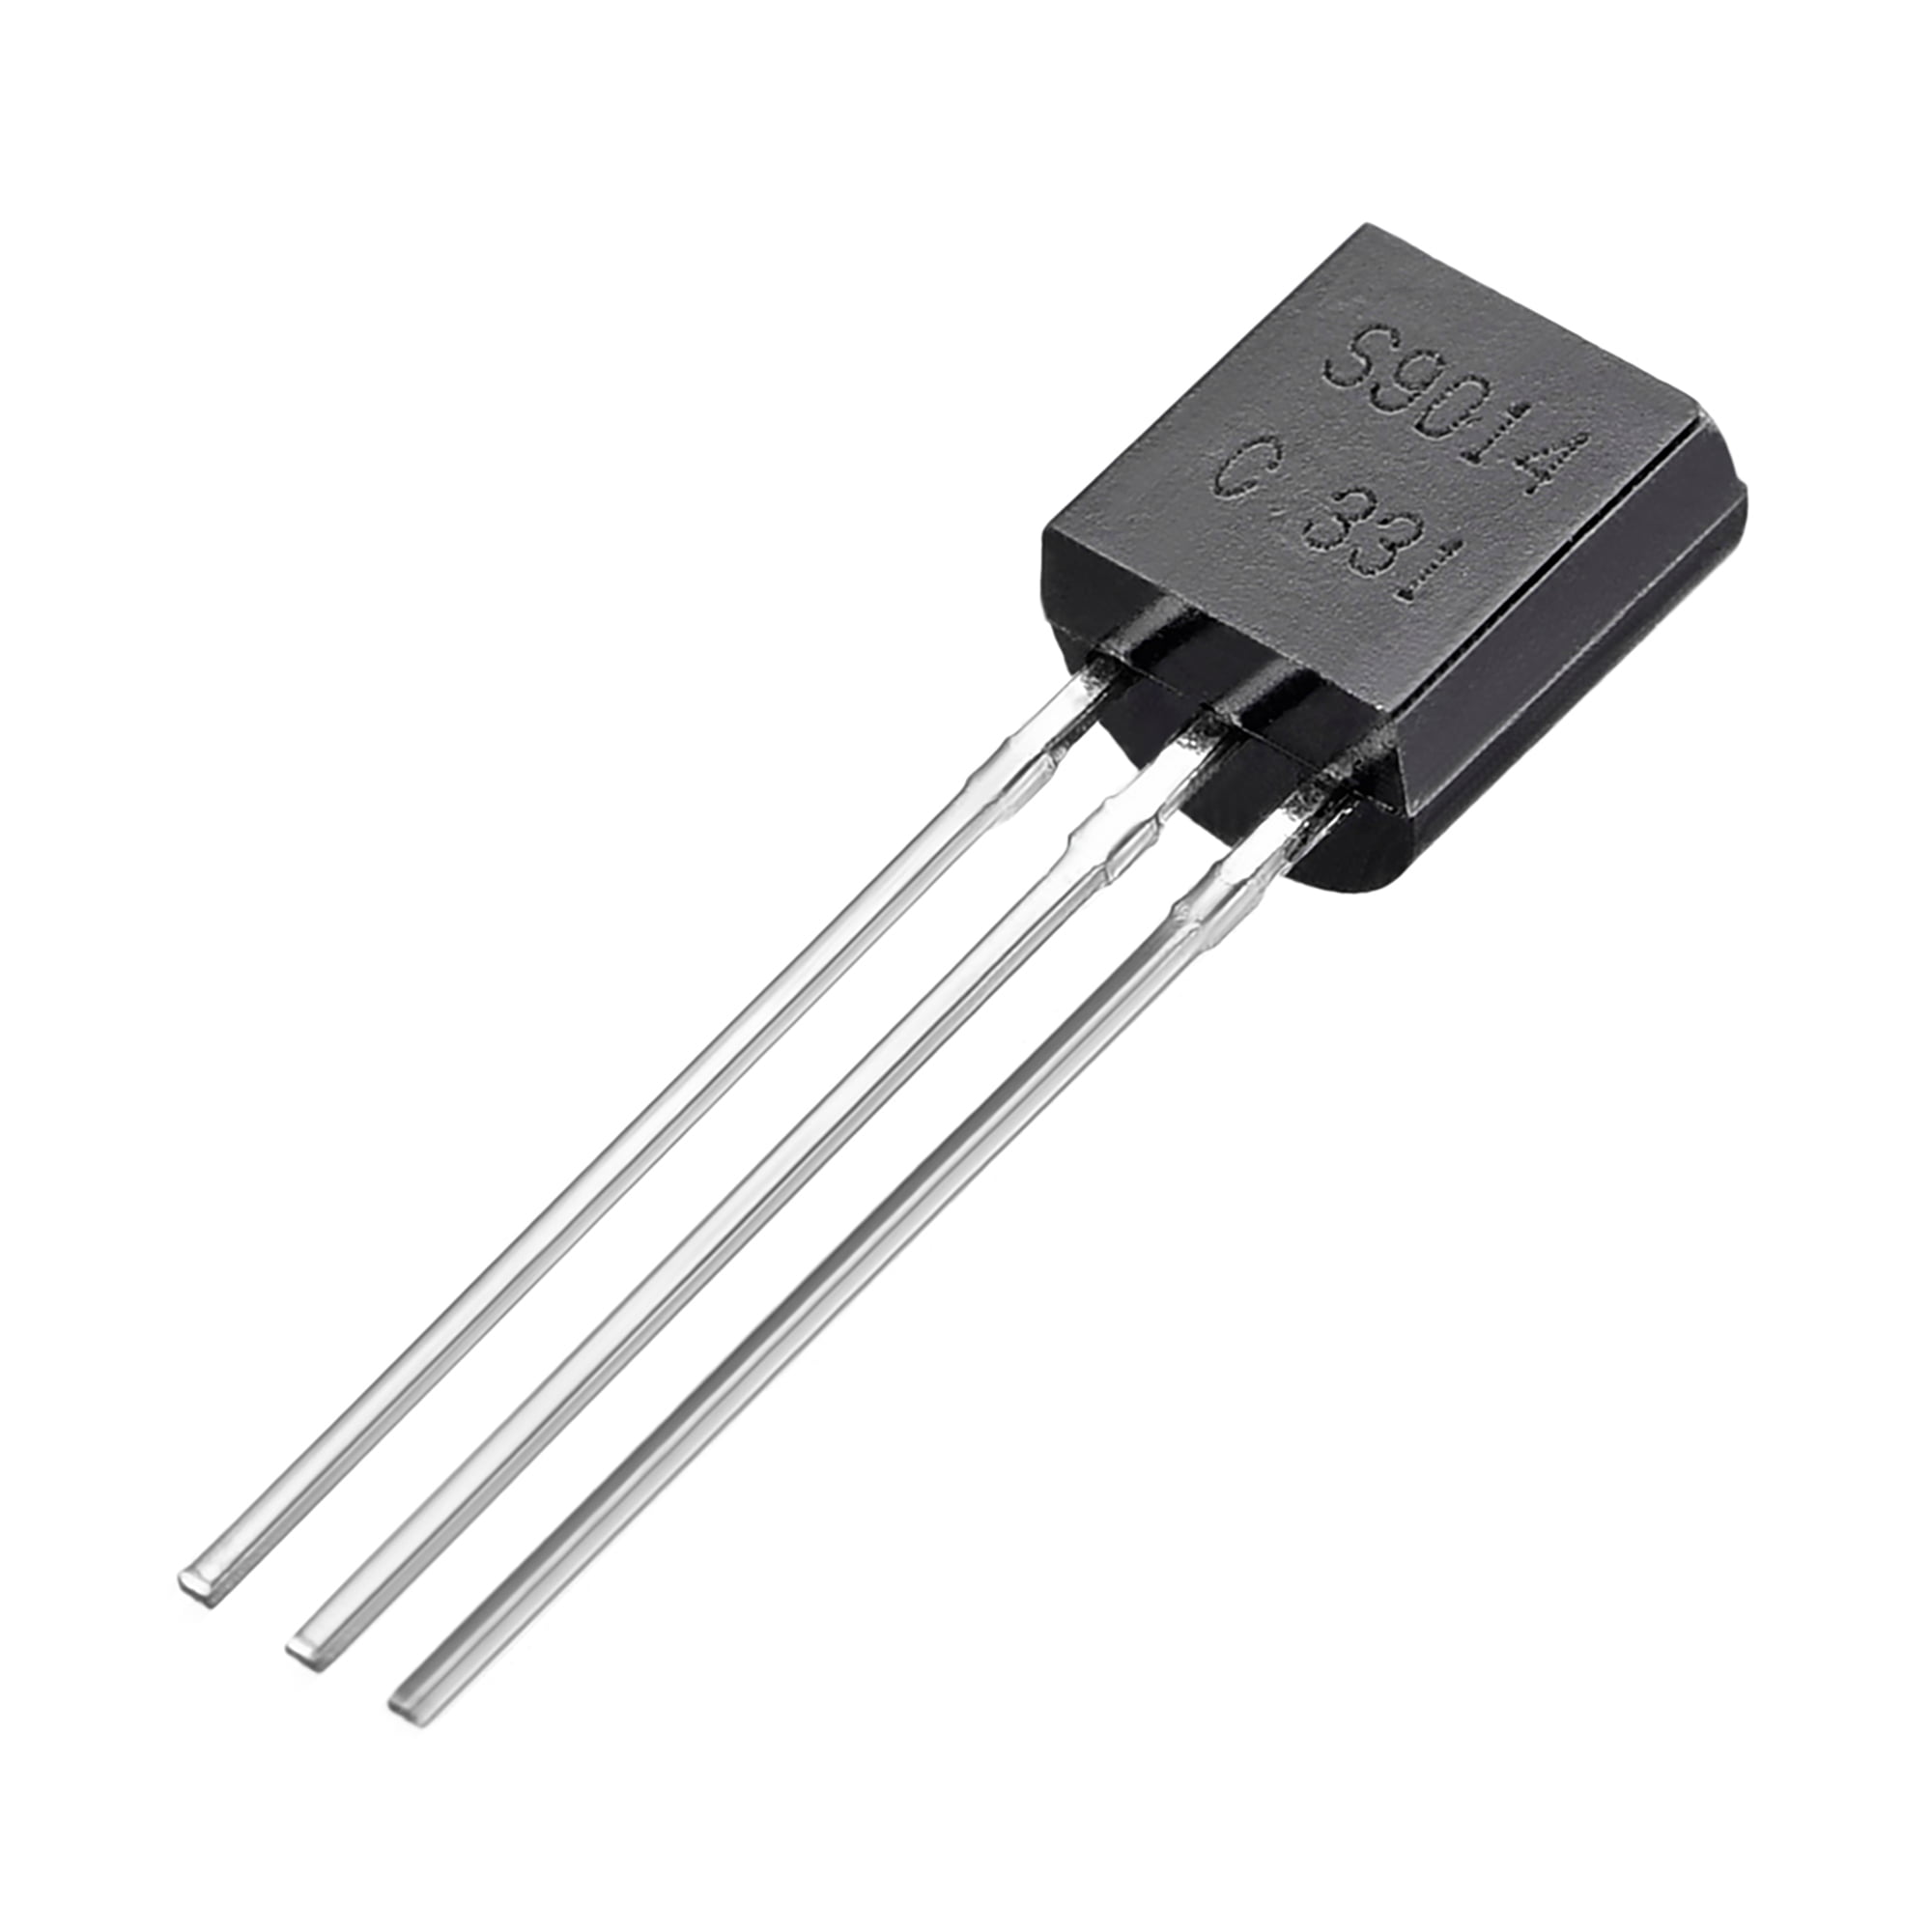 S9014 Plastic-Encapsulate Power Transistor NPN TO-92 ...